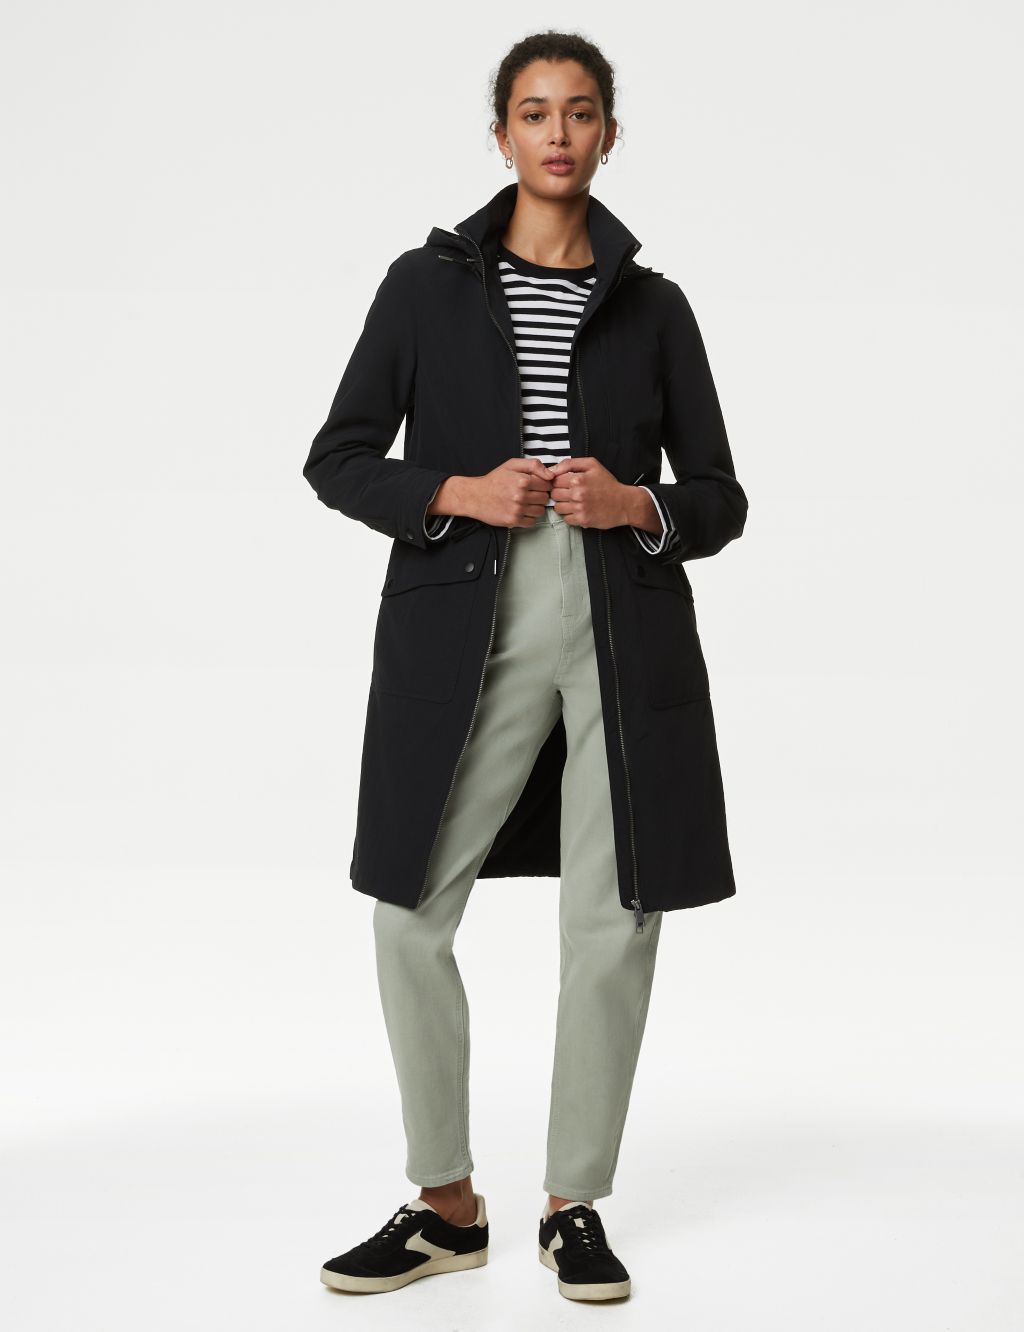 Shop Women's Black Coats | Women's Black Jackets | M&S